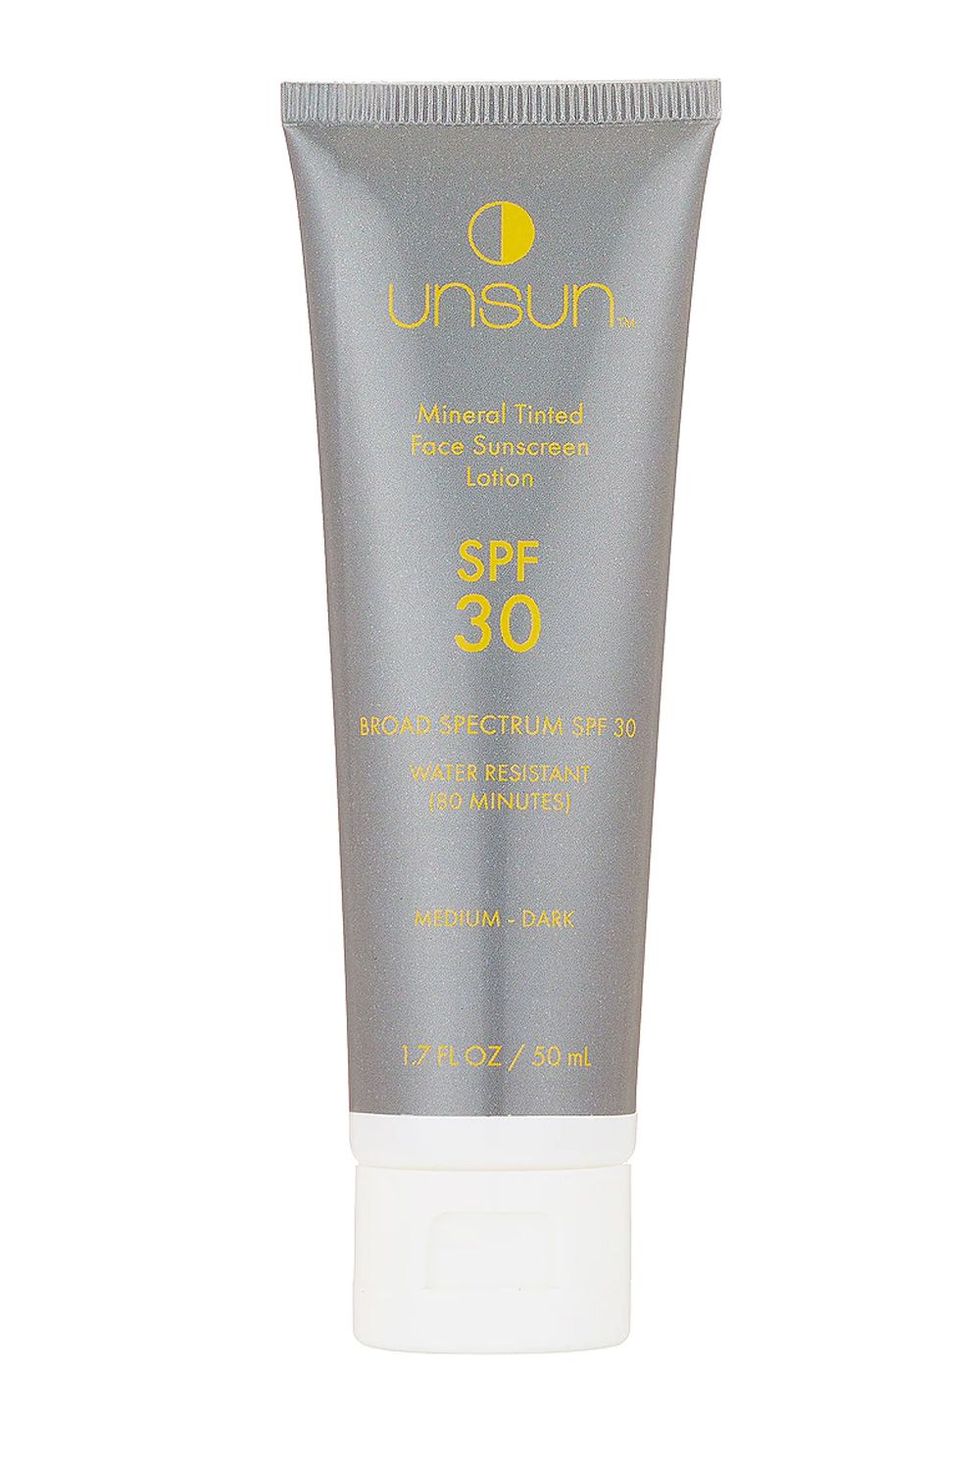 Unsun Mineral Tinted Face Sunscreen 